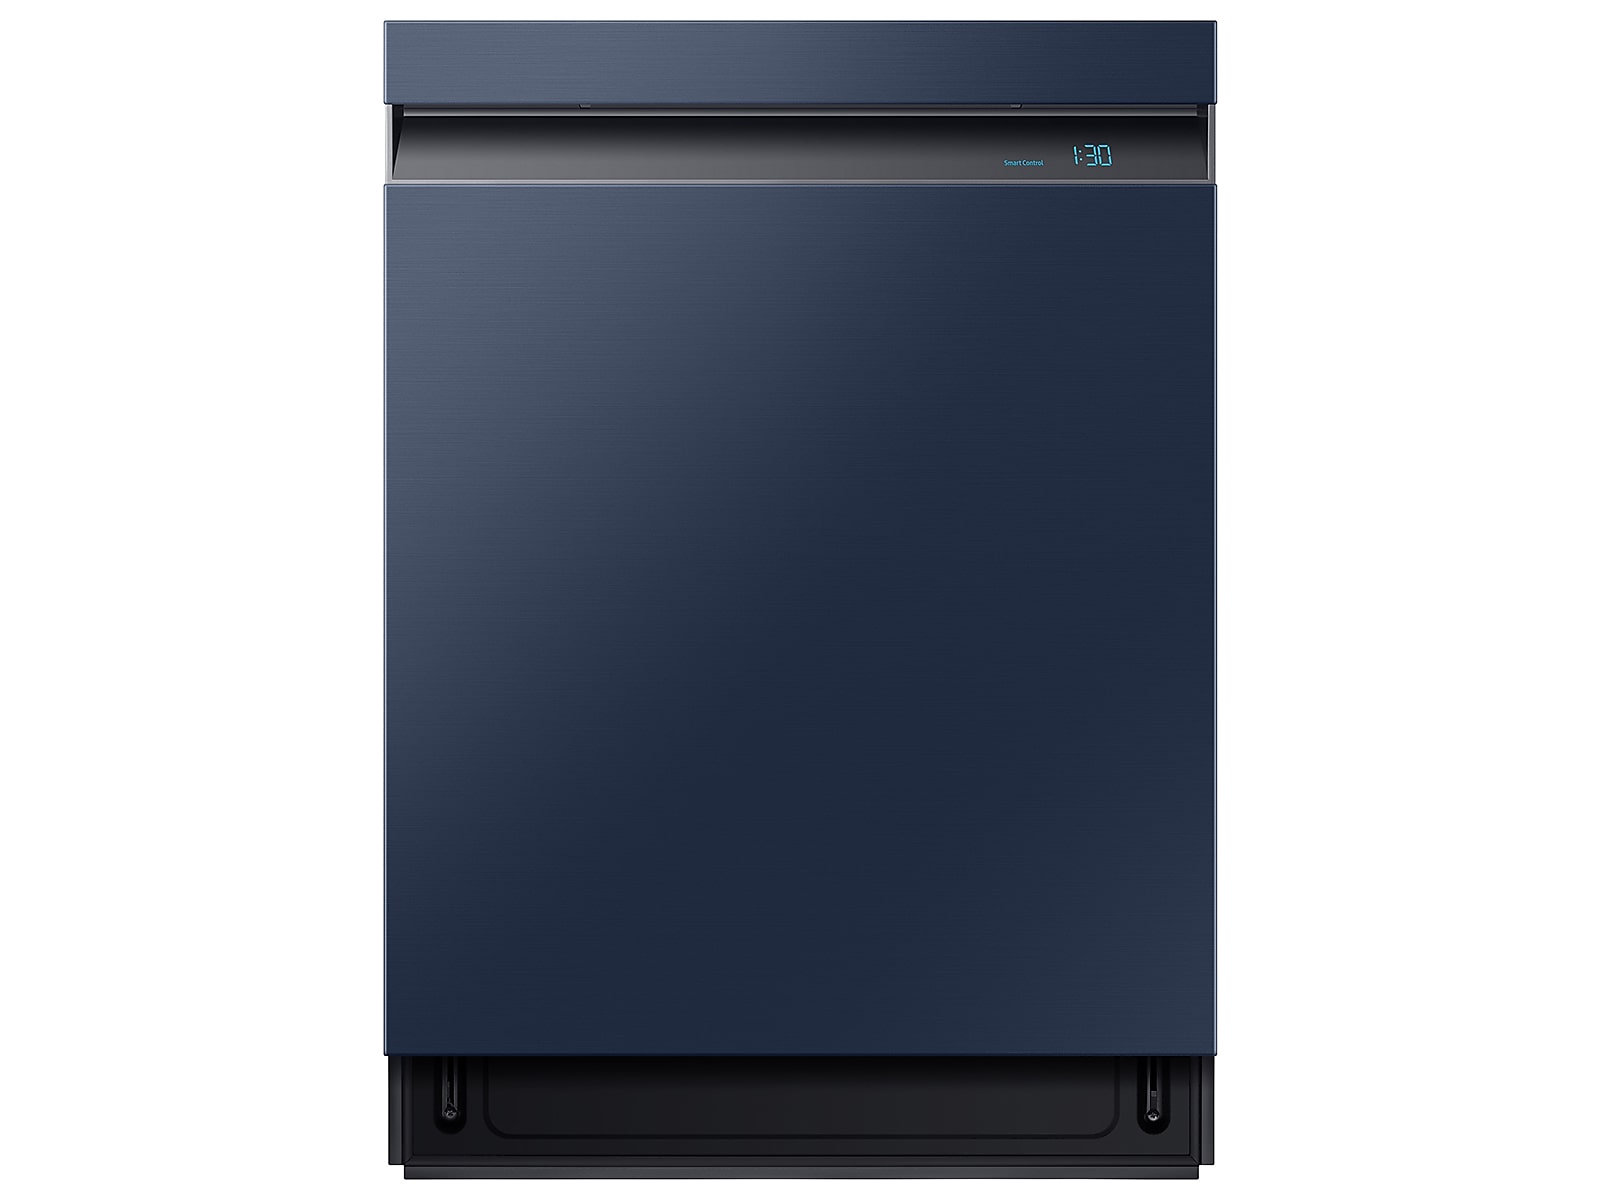 Samsung Bespoke Smart 39dBA Dishwasher with Linear Wash in Fingerprint Resistant Navy Blue Stainless Steel/ Bespoke(DW80R9950QN/AA)